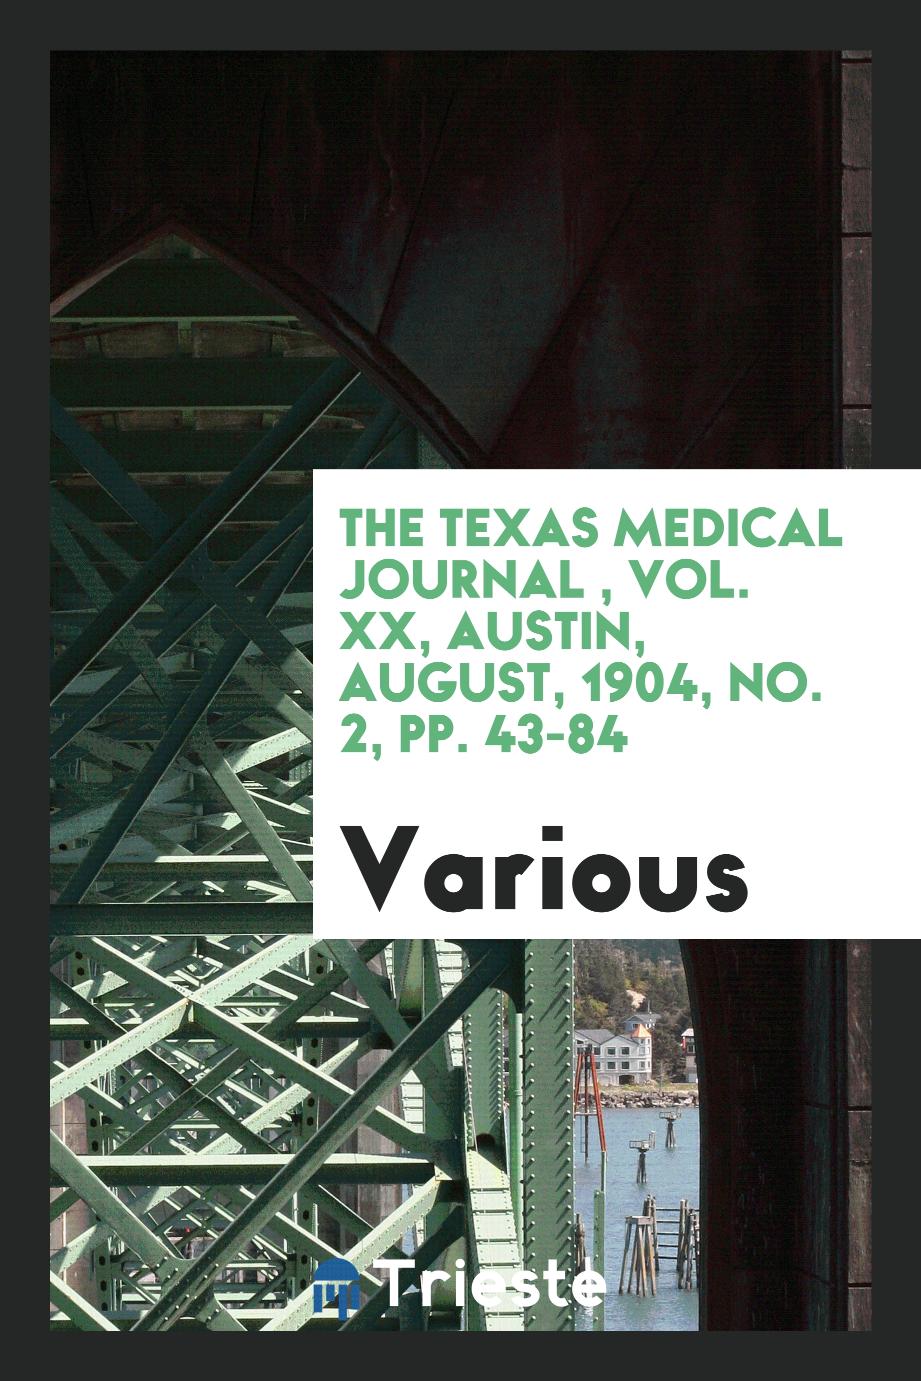 The Texas Medical Journal , Vol. XX, Austin, August, 1904, No. 2, pp. 43-84